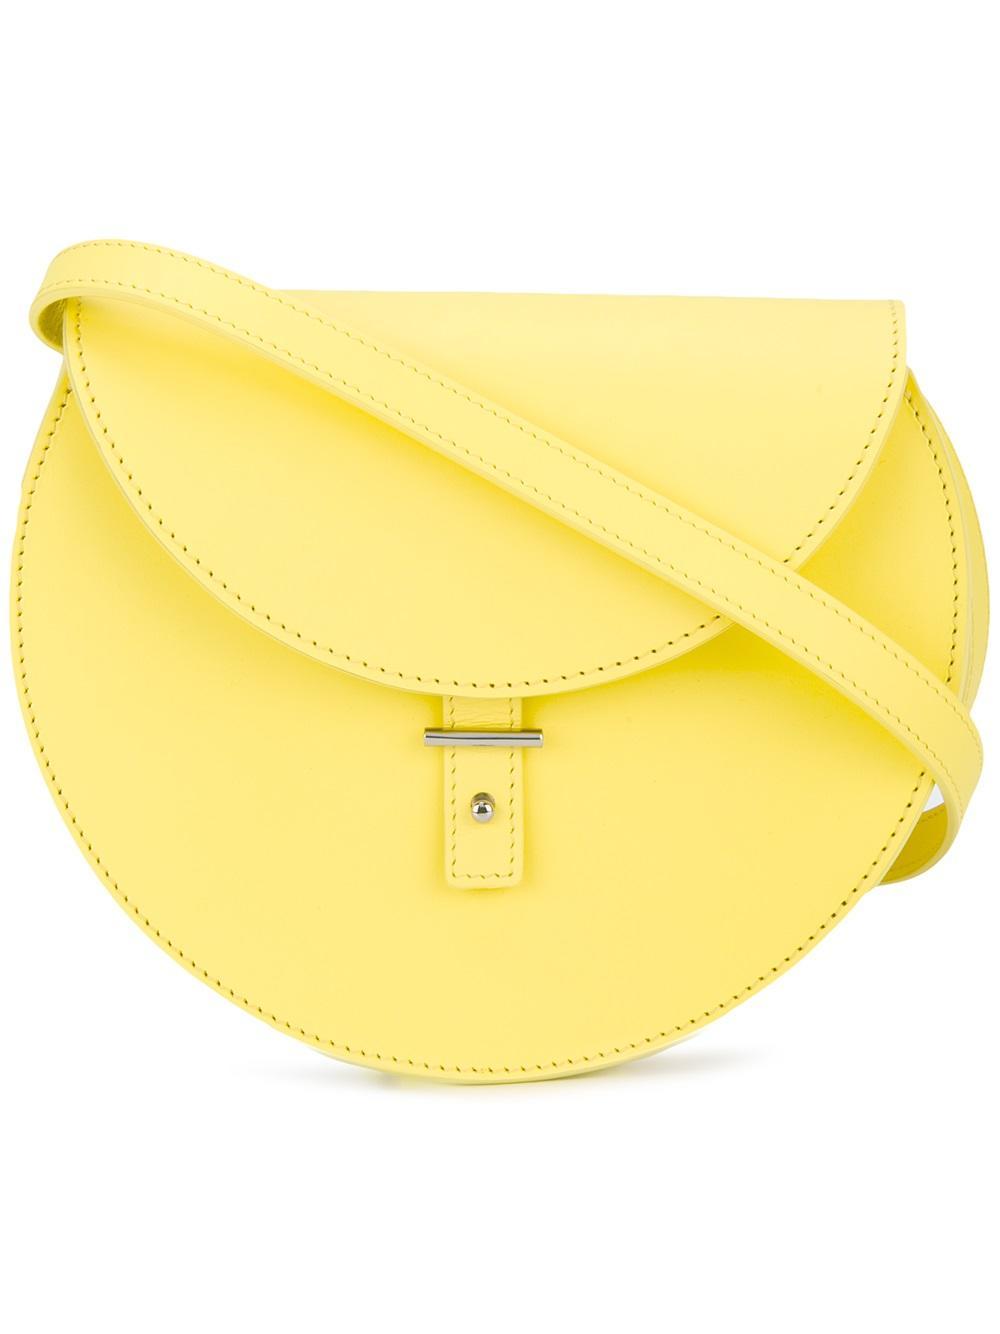 Lyst - Pb 0110 Round Crossbody Bag in Yellow